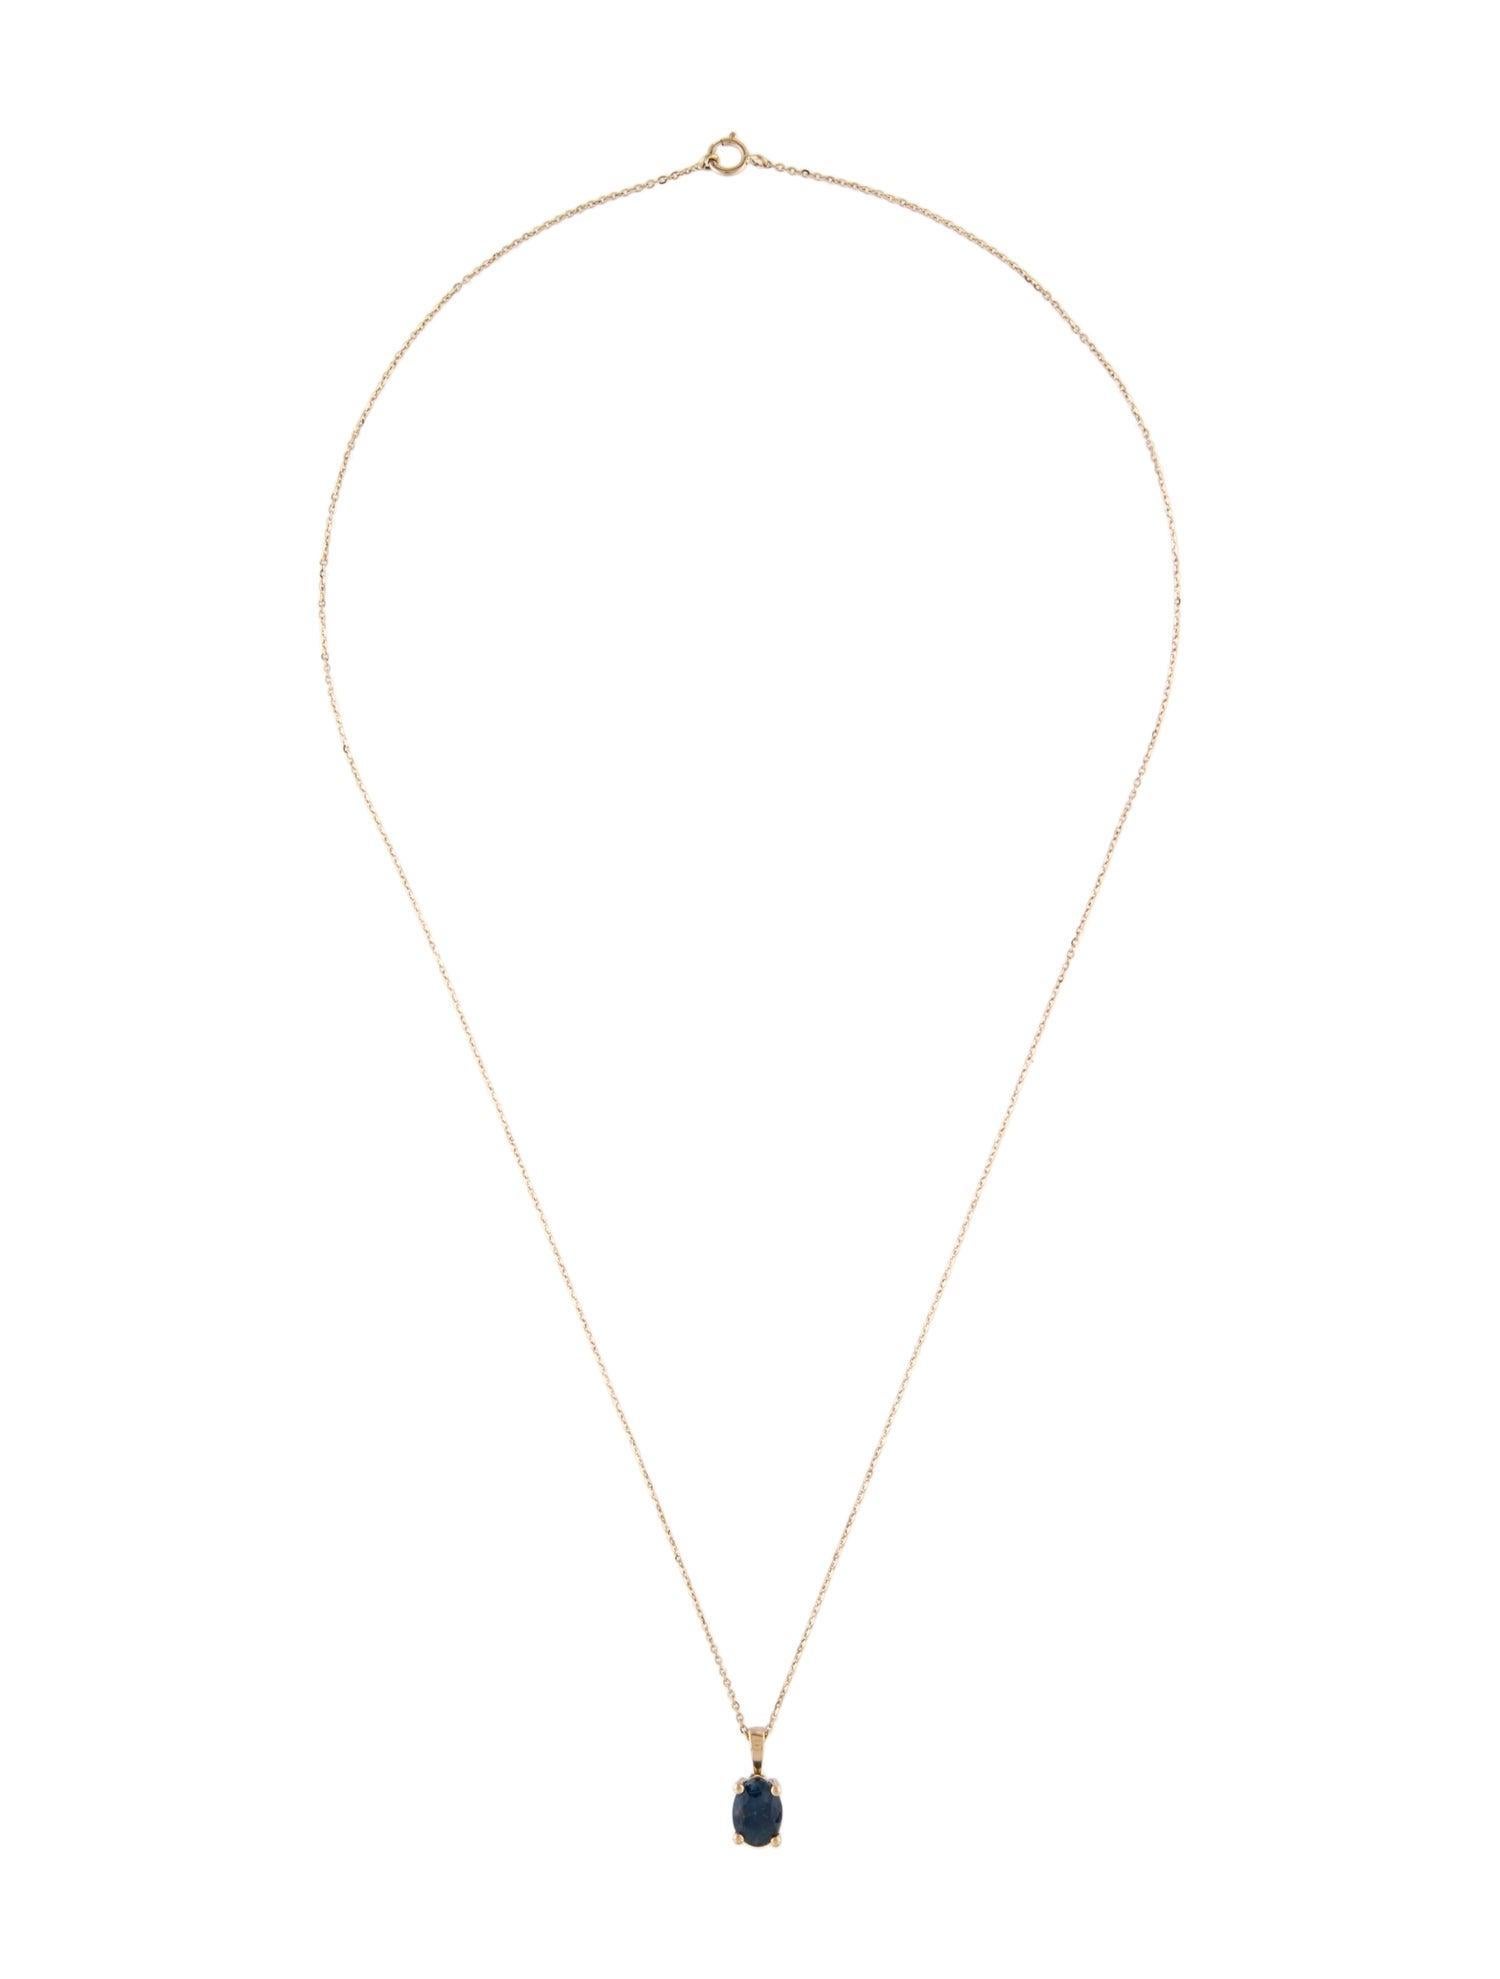 Brilliant Cut Stunning 14K Sapphire Pendant Necklace  1.50ct Sparkling Gemstone Accent Piece For Sale